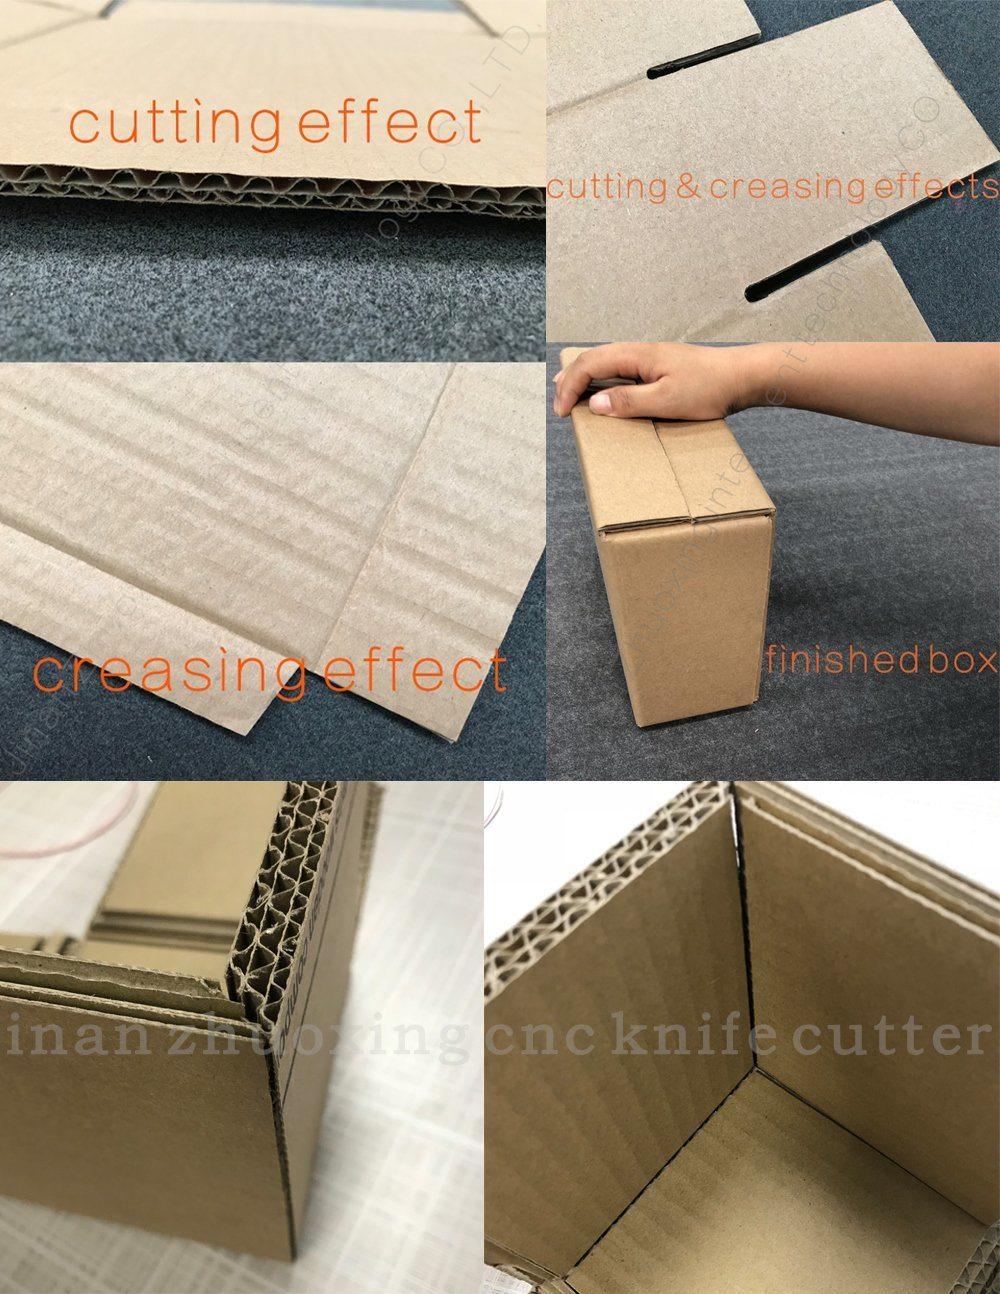 Hot Sale Zhuoxing Automatic Cardboard Carton Creasing and Cutting Machine